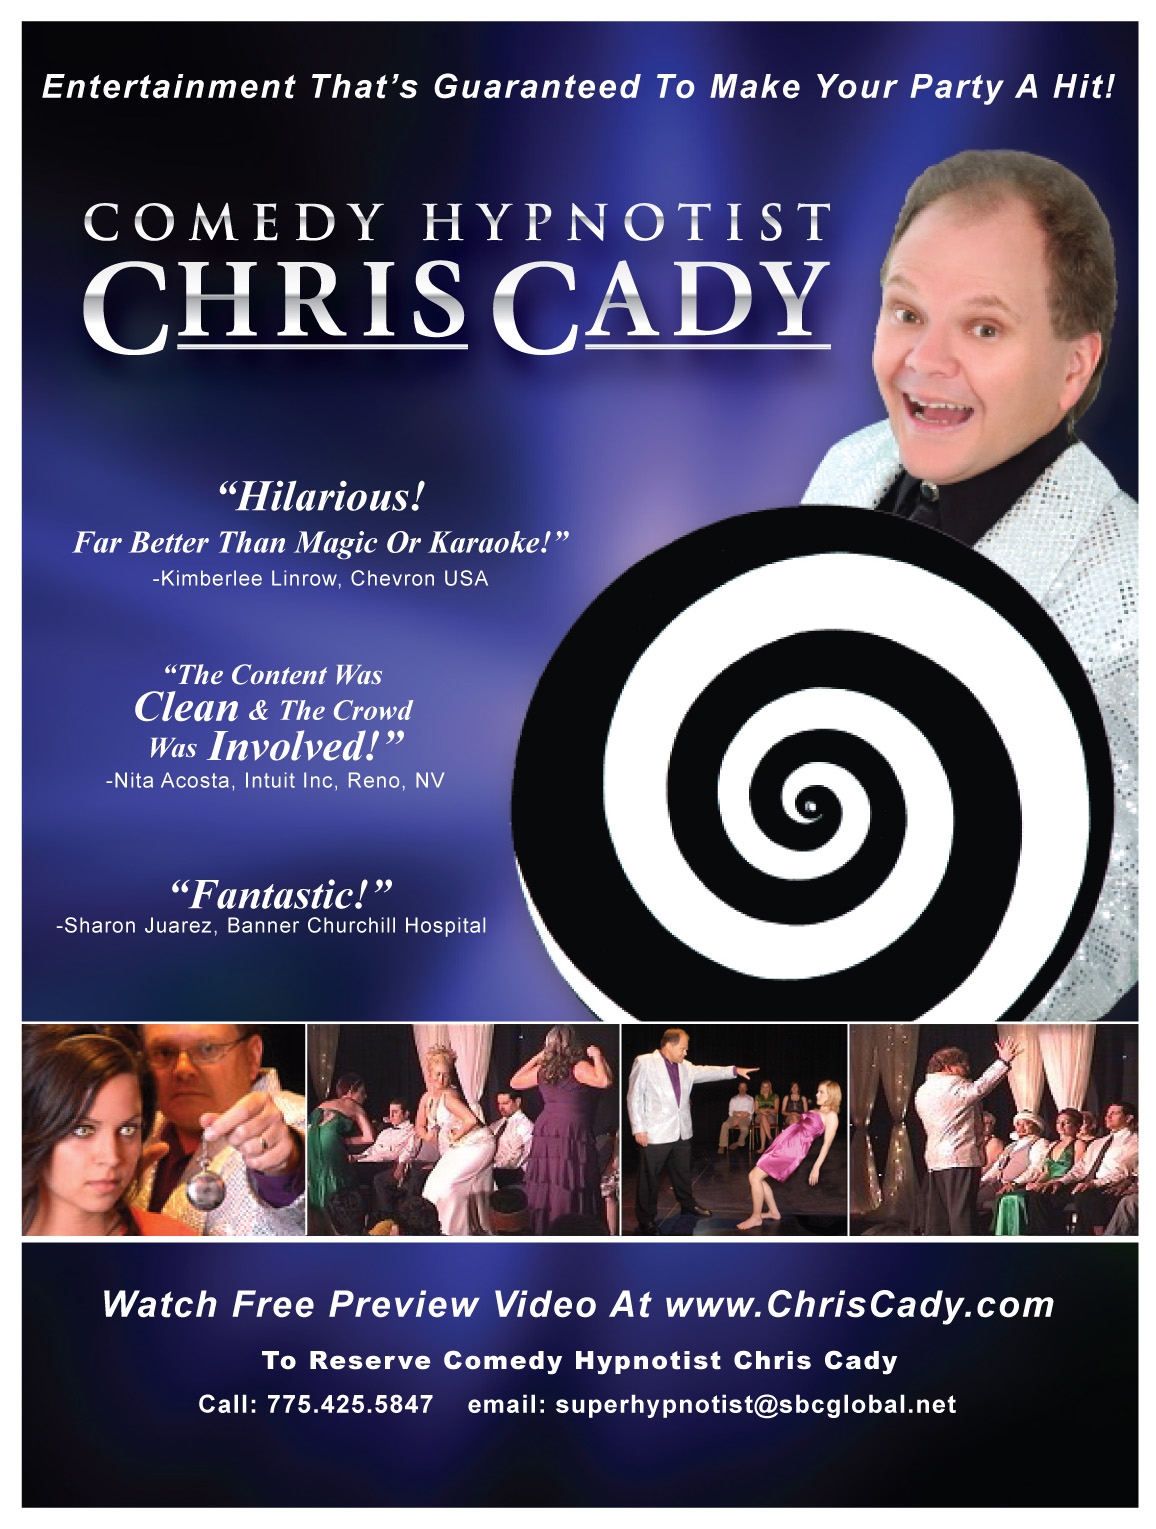 corporate entertainment hypnotist show hypnotist chris cady www.chriscady.com